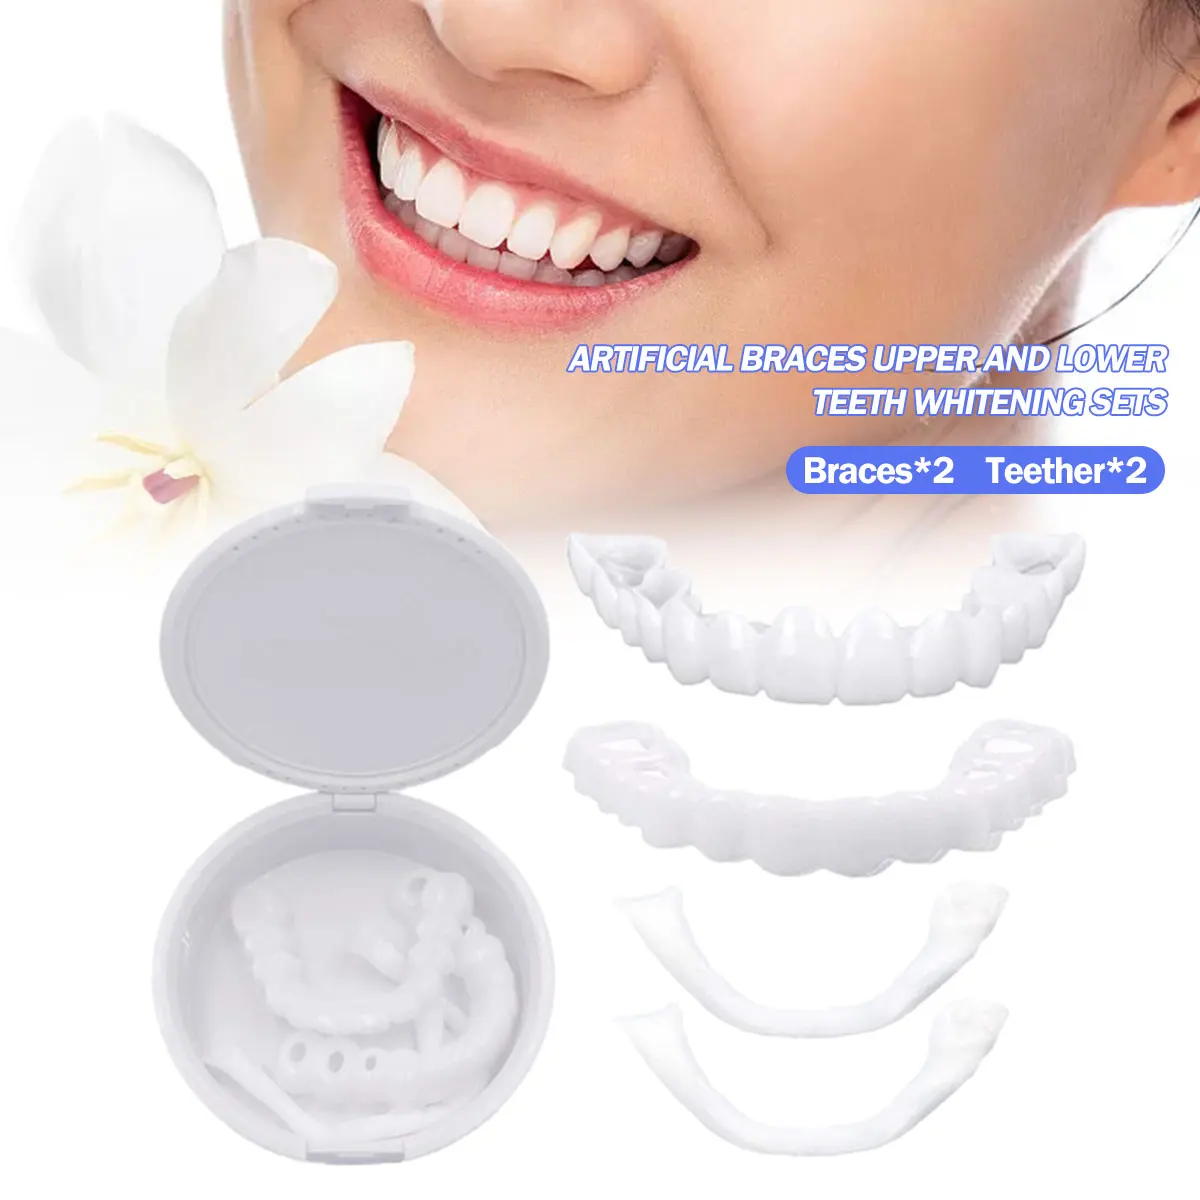 

2 Pair Teeth Veneers Whitening Dentures Imitation Braces Temporary False Teeth Cover Perfect Smile Comfortable Fit Denture Kit